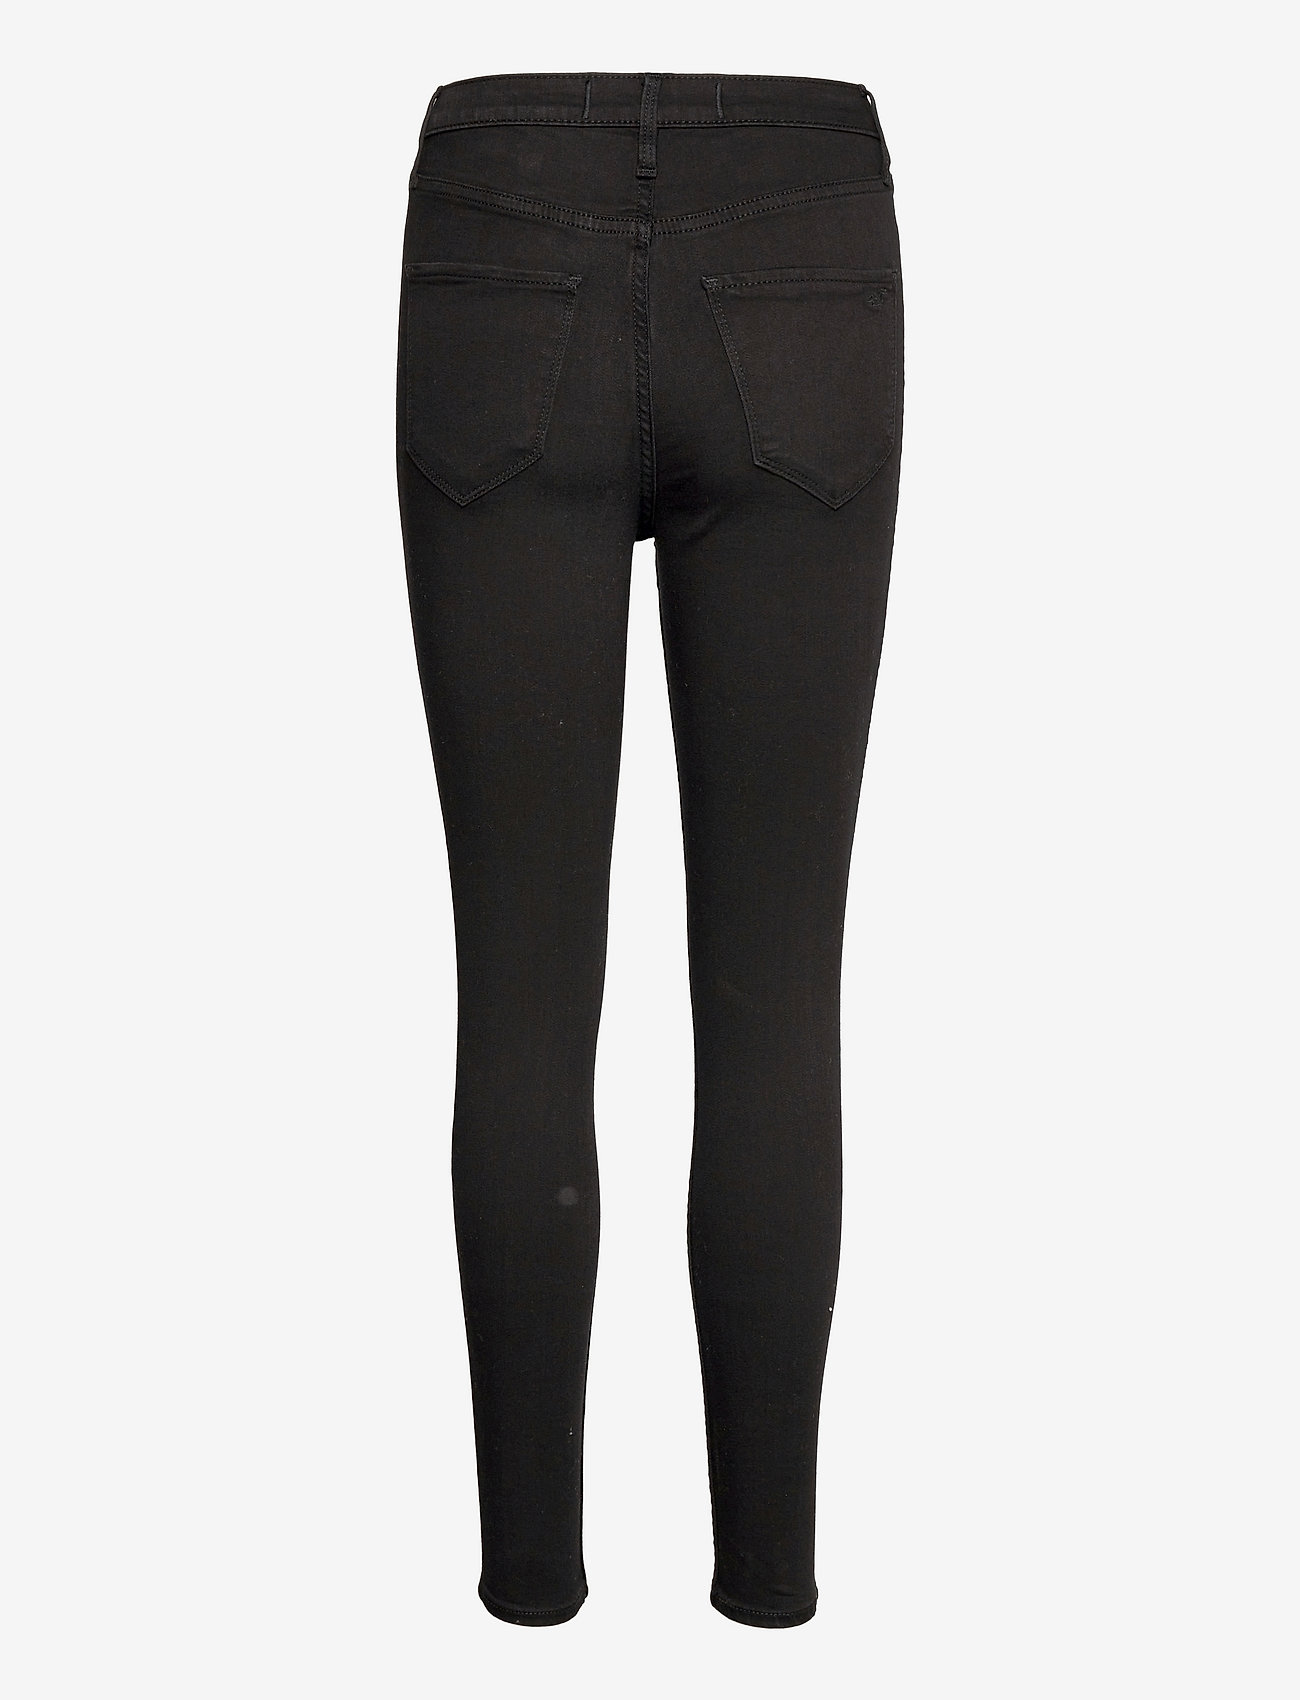 Hollister - HCo. GIRLS JEANS - skinny jeans - black clean ultra high rise jean legging - 1